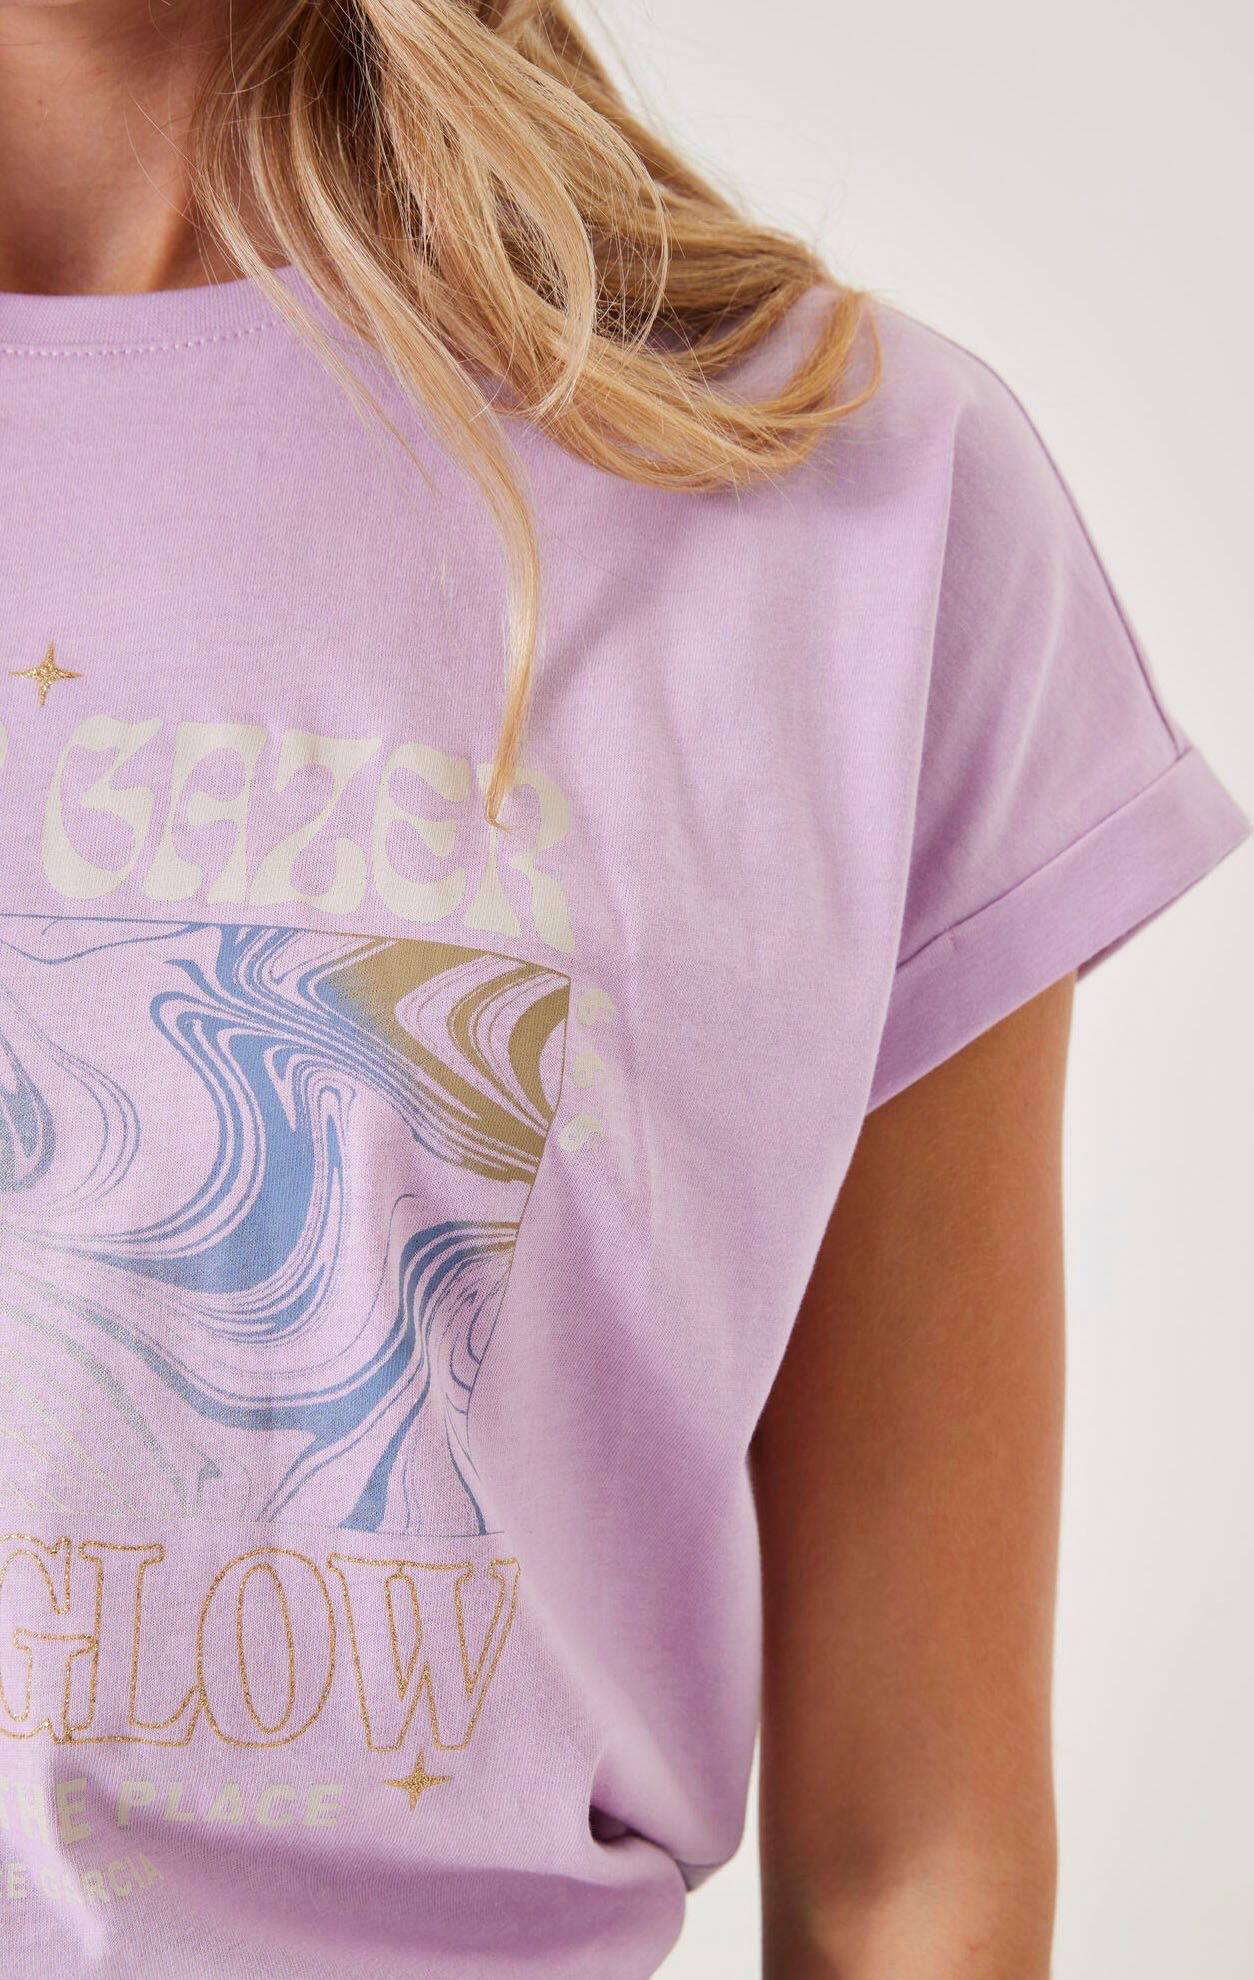 Garcia Print-Shirt fragnant lil